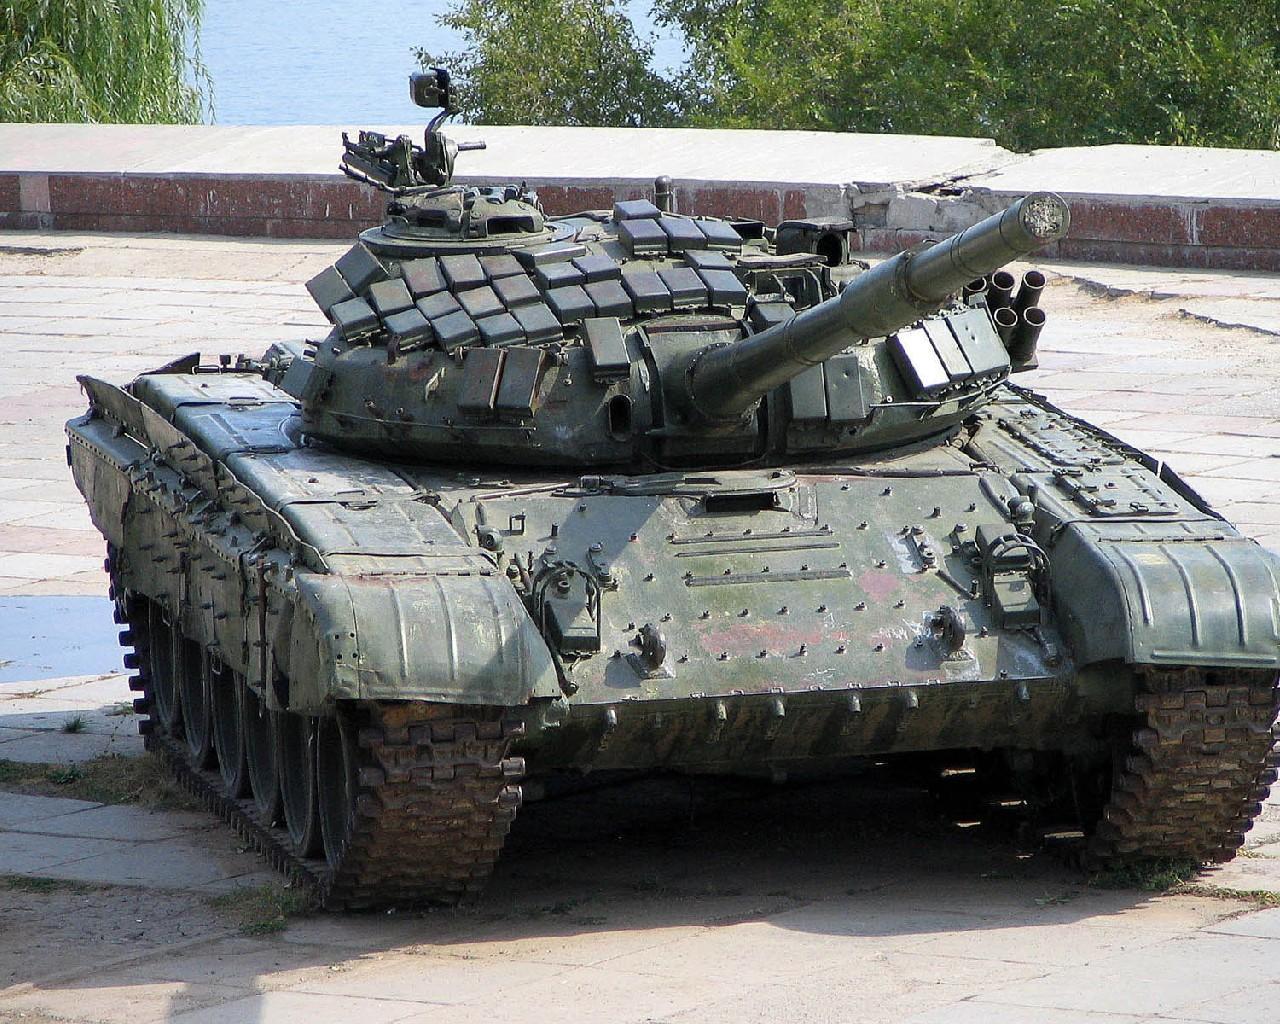 Купить б у танк. Танк т72. Т-72б2. Танк т-72б. Т-72б основной боевой танк.